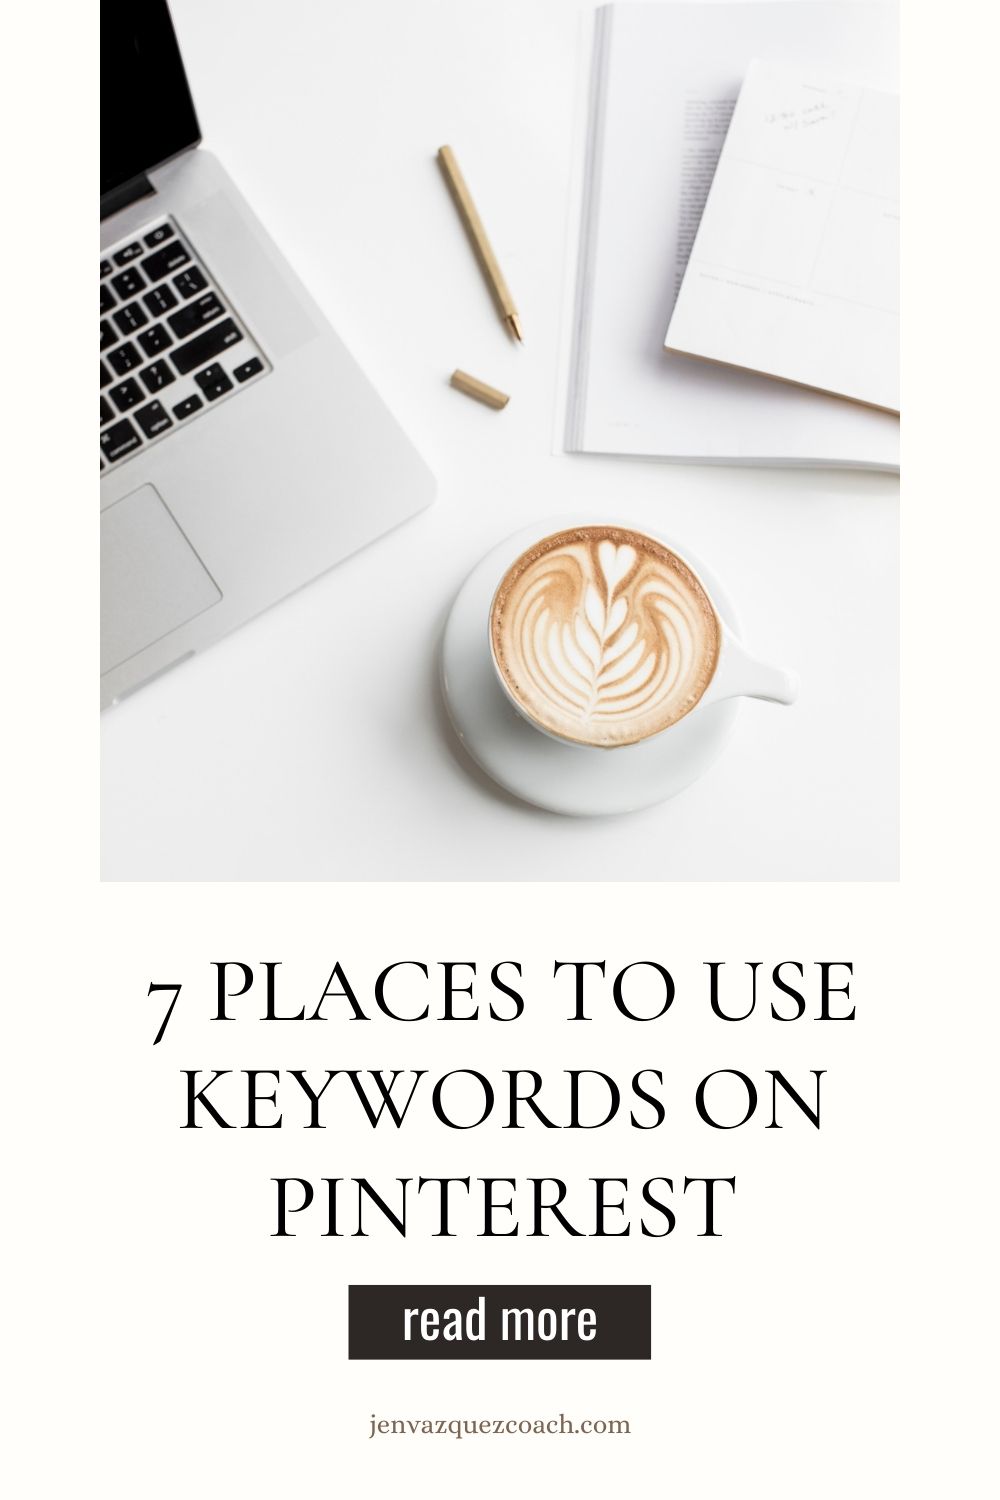 7 places to use keywords on Pinterest by Jen Vazquez Pinterest Strategist